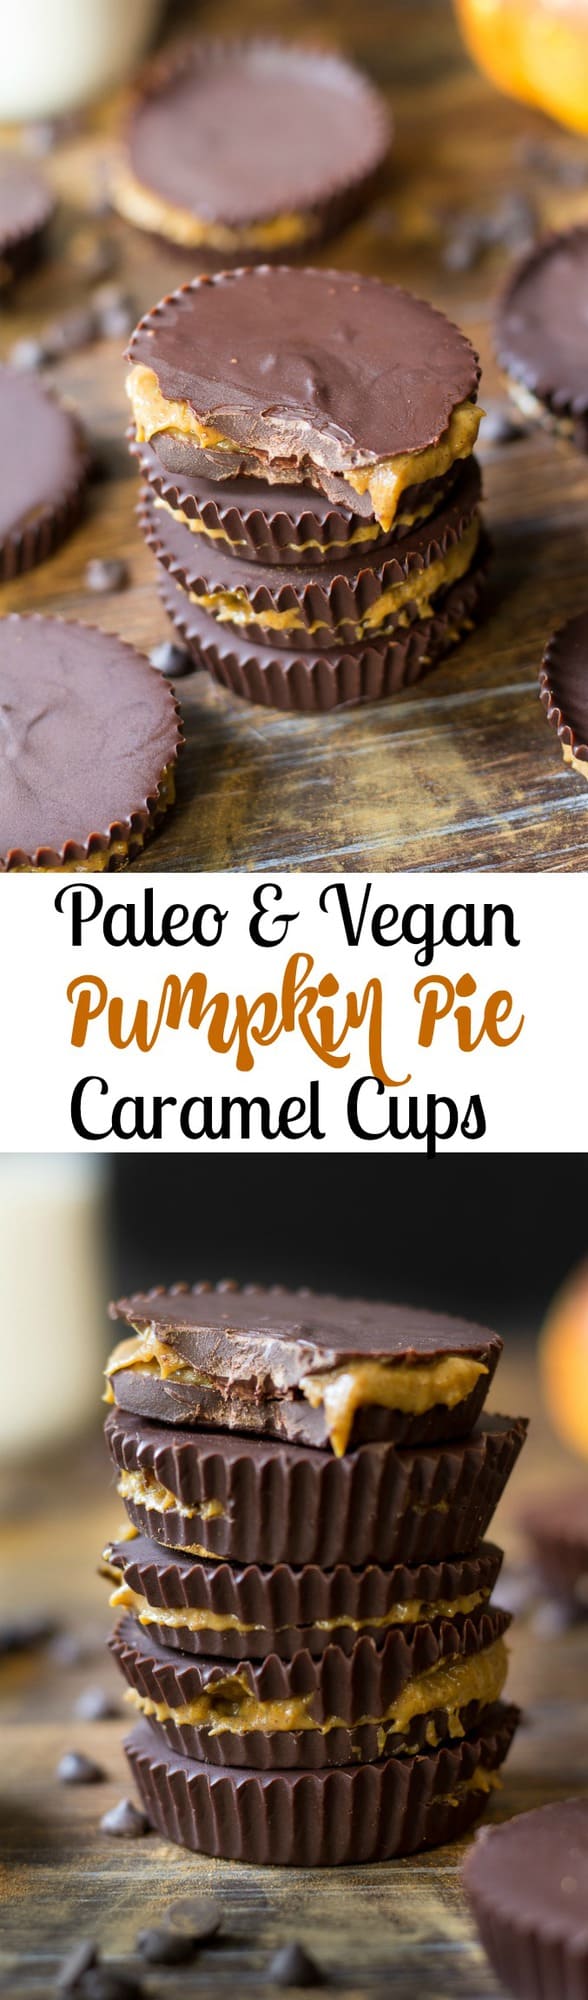 Pumpkin pie caramel cups that are Paleo and vegan! Gooey pumpkin pie caramel filling inside a creamy dark chocolate cup. Nut free and refined sugar free.